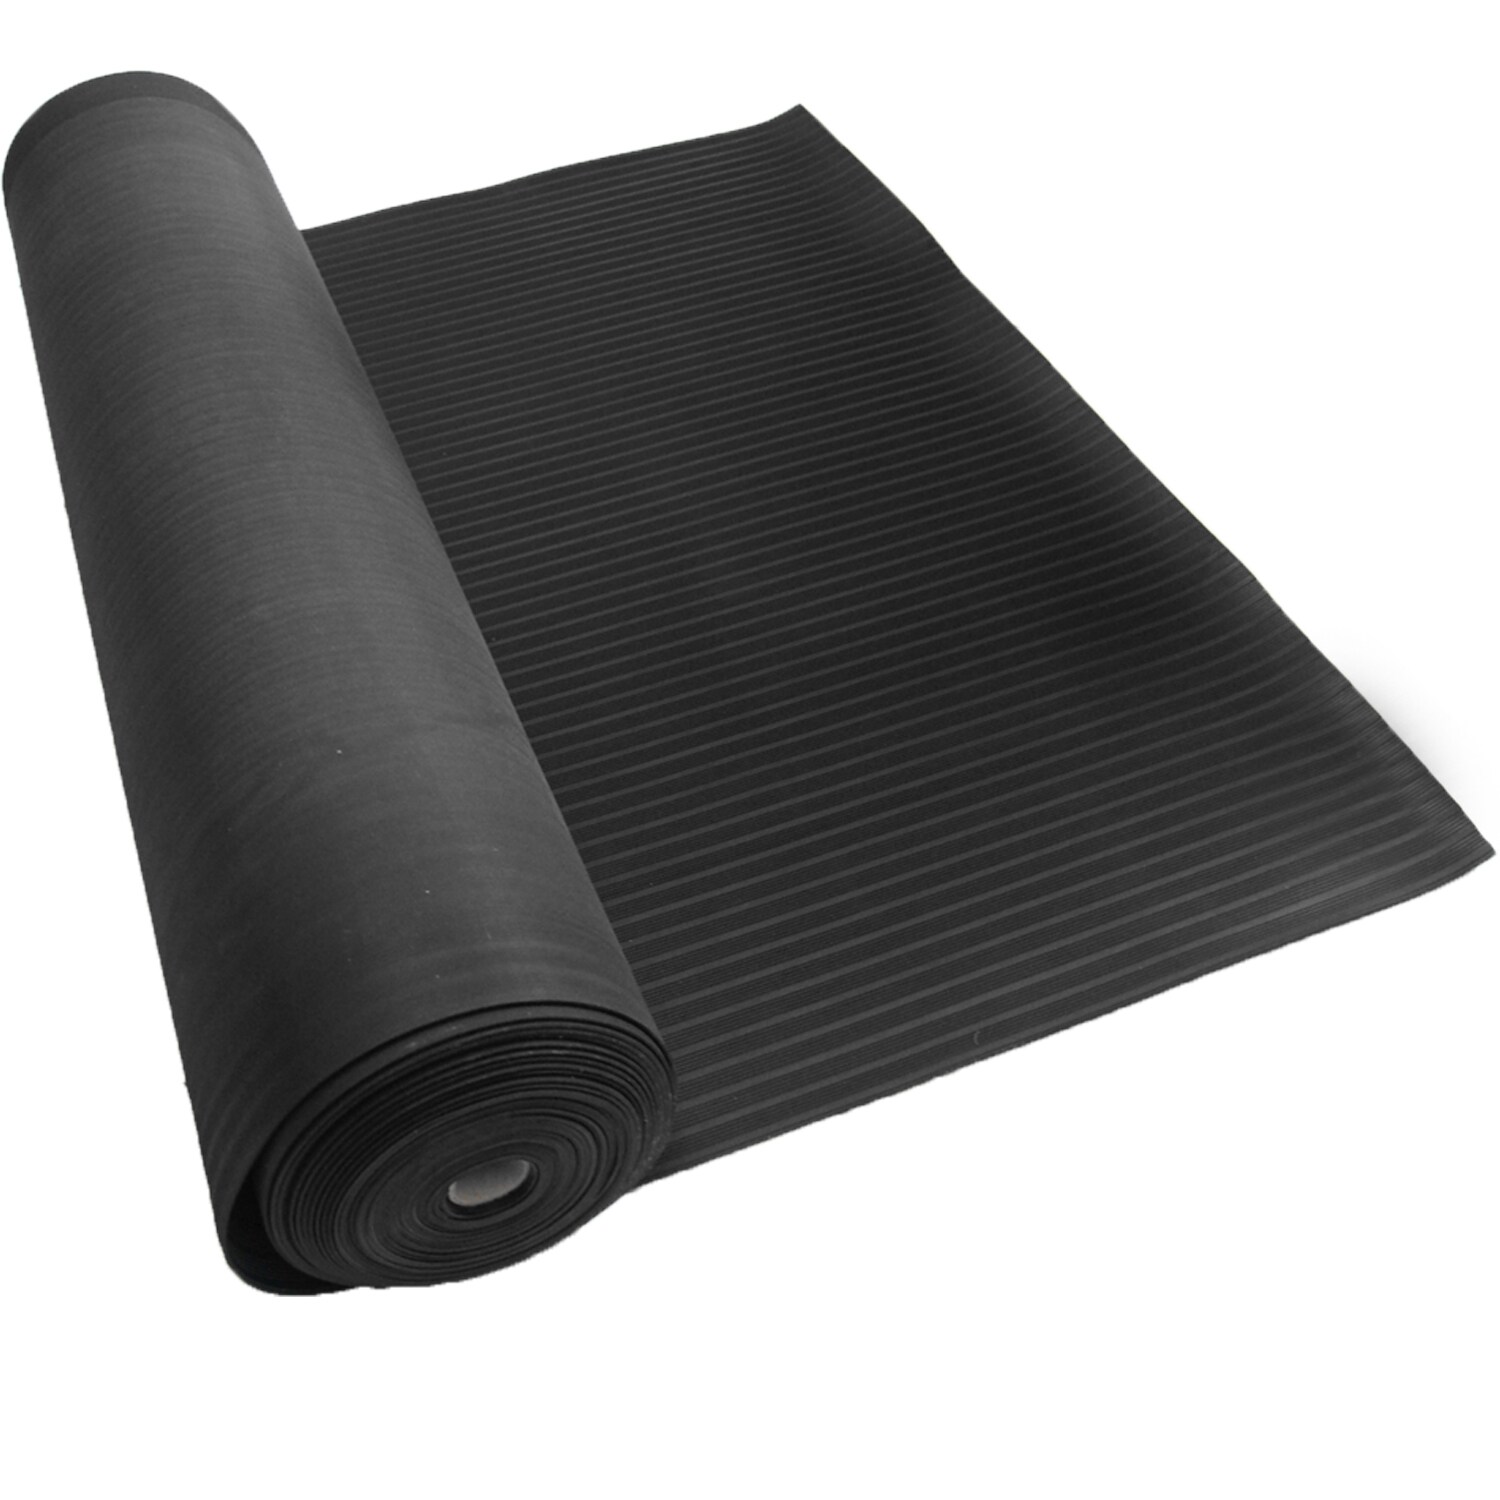 Rubber-Cal Elephant Bark Rubber Flooring - 1/4 inch x 4ft. x 7ft. Rubber Mat - Black